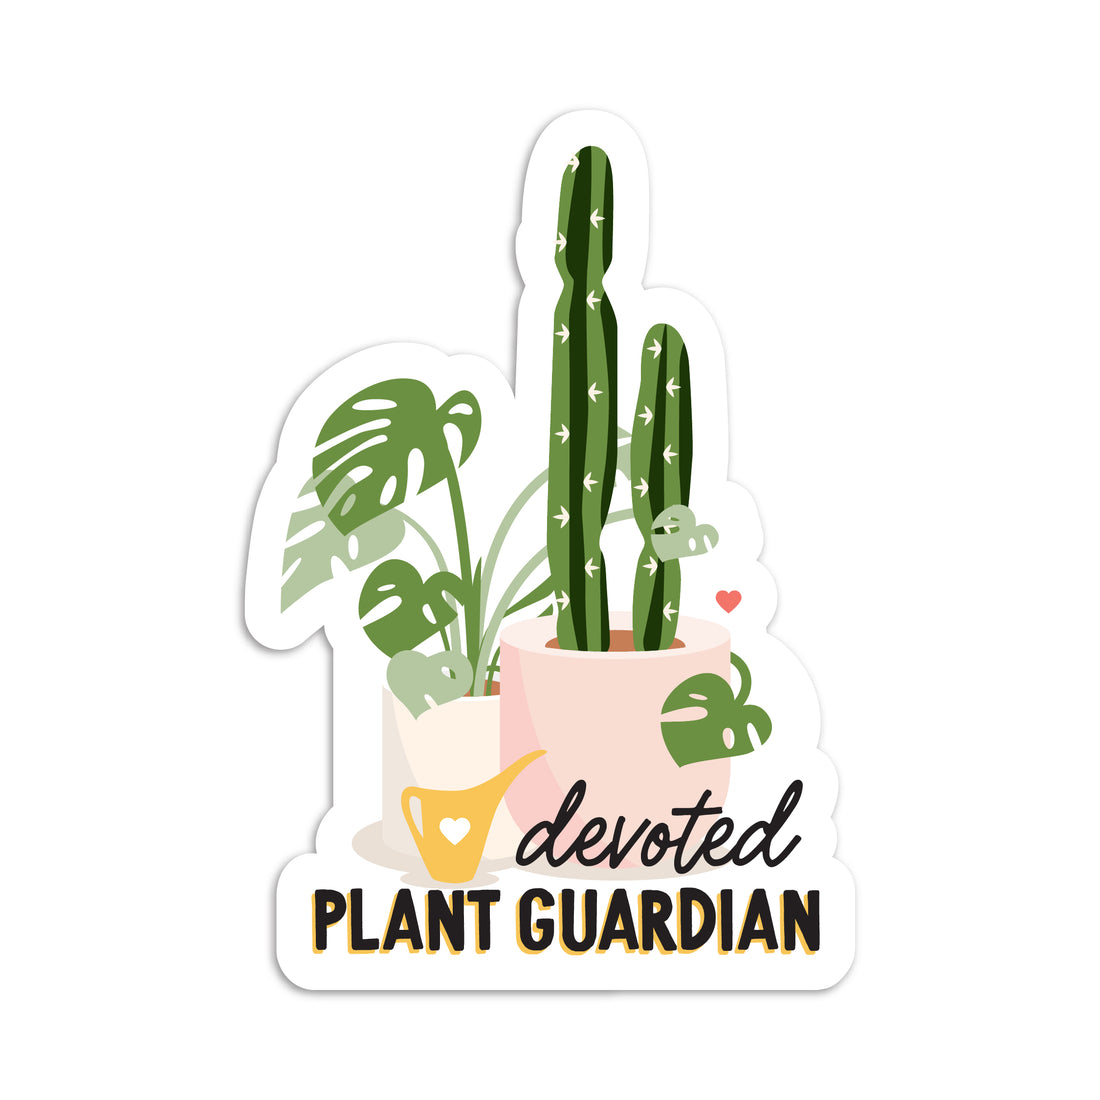 Devoted plant guardian vinyl sticker by I&